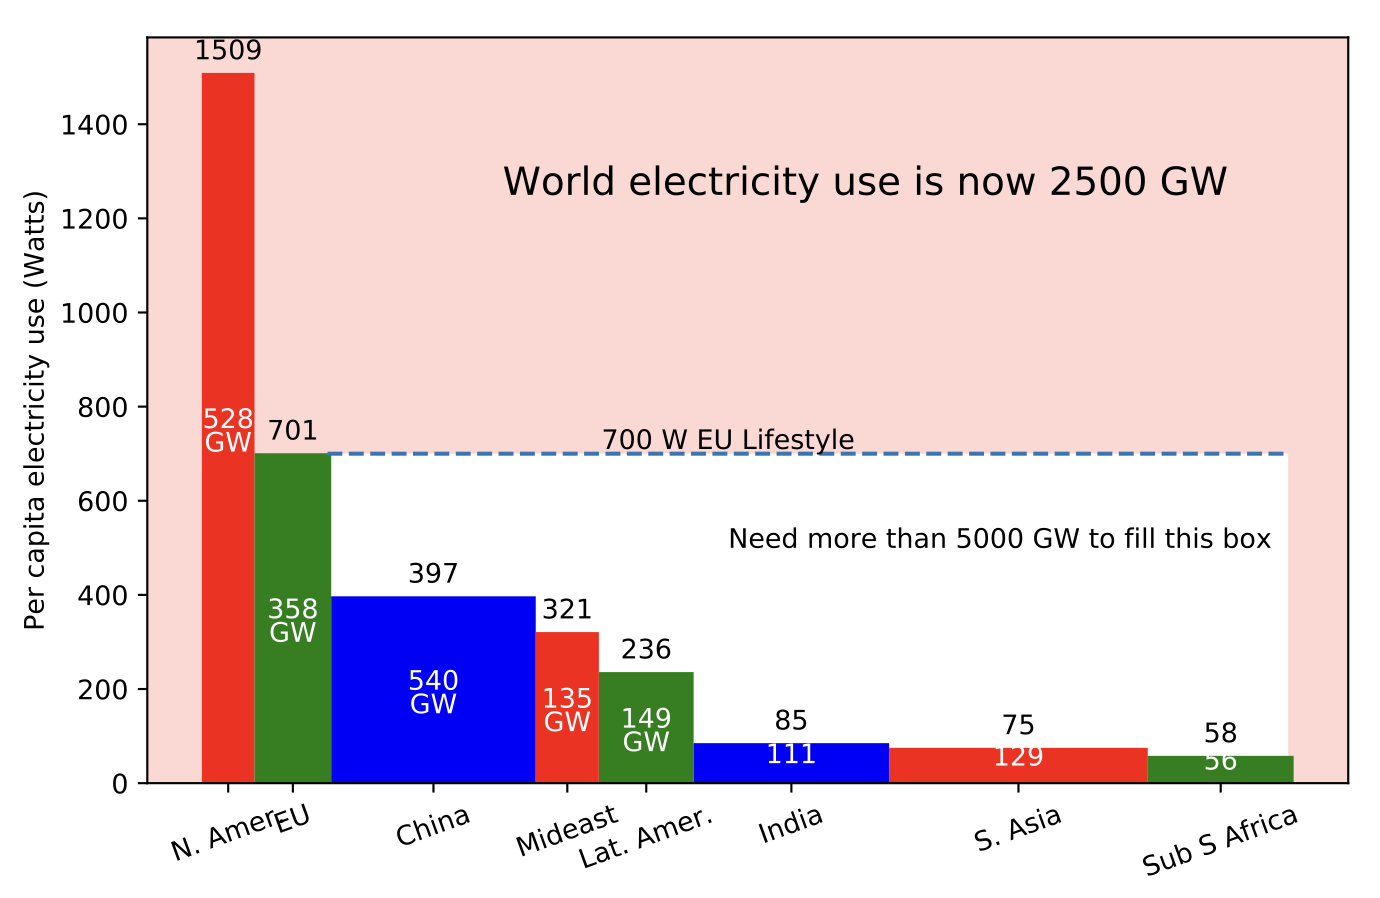 Devanney Fig 1.3: Regional distribution of electricity consumption